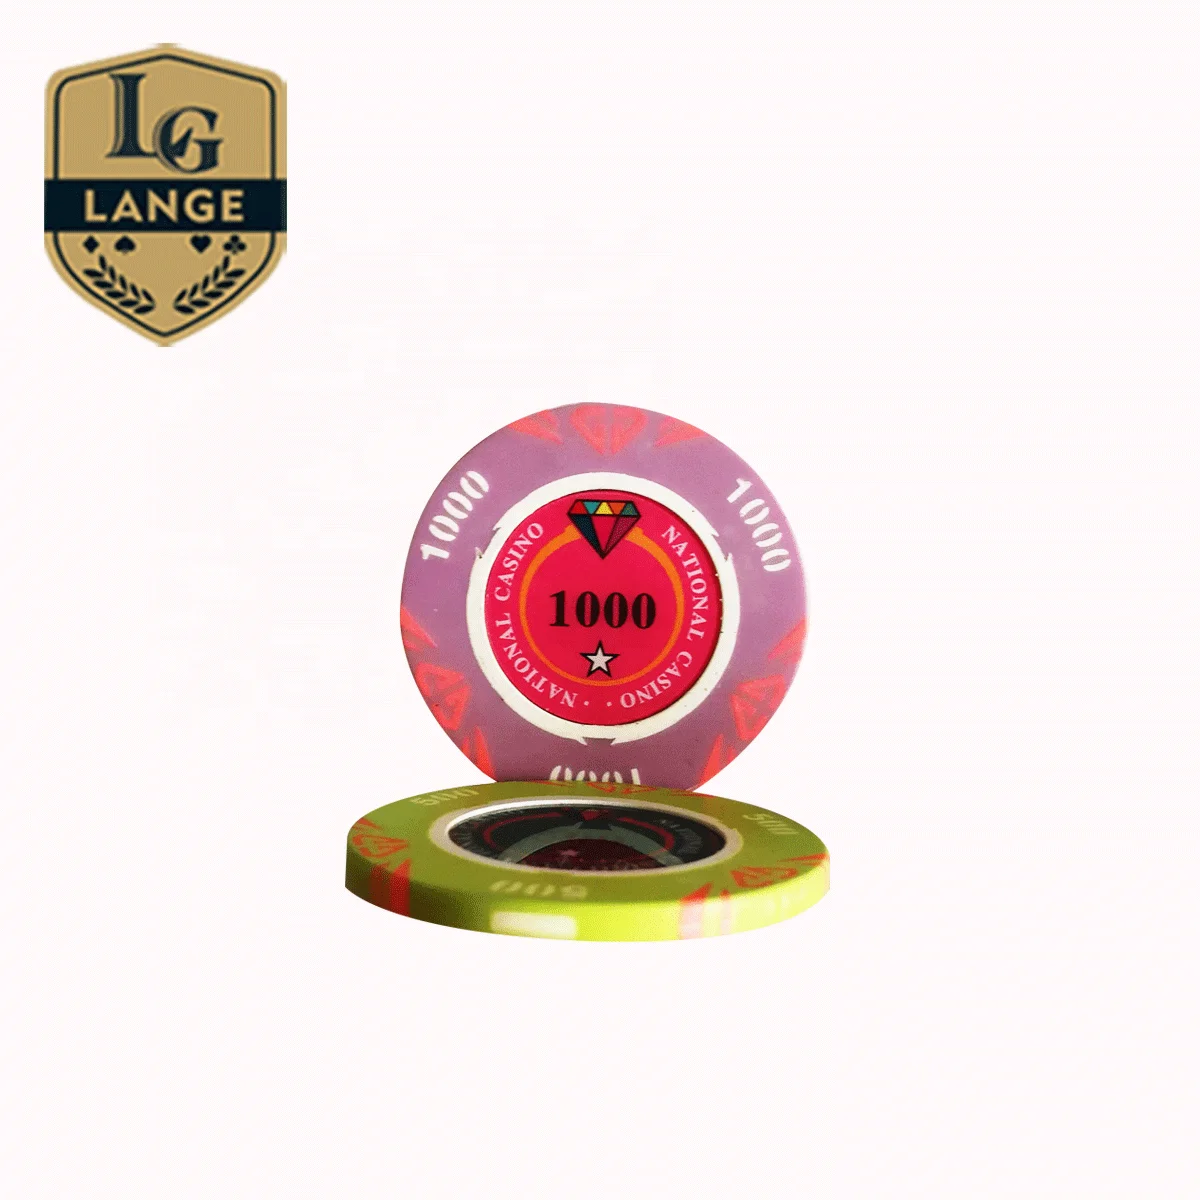 50pcs Las Vegas Laser Casino Clay Poker Chips $1000 